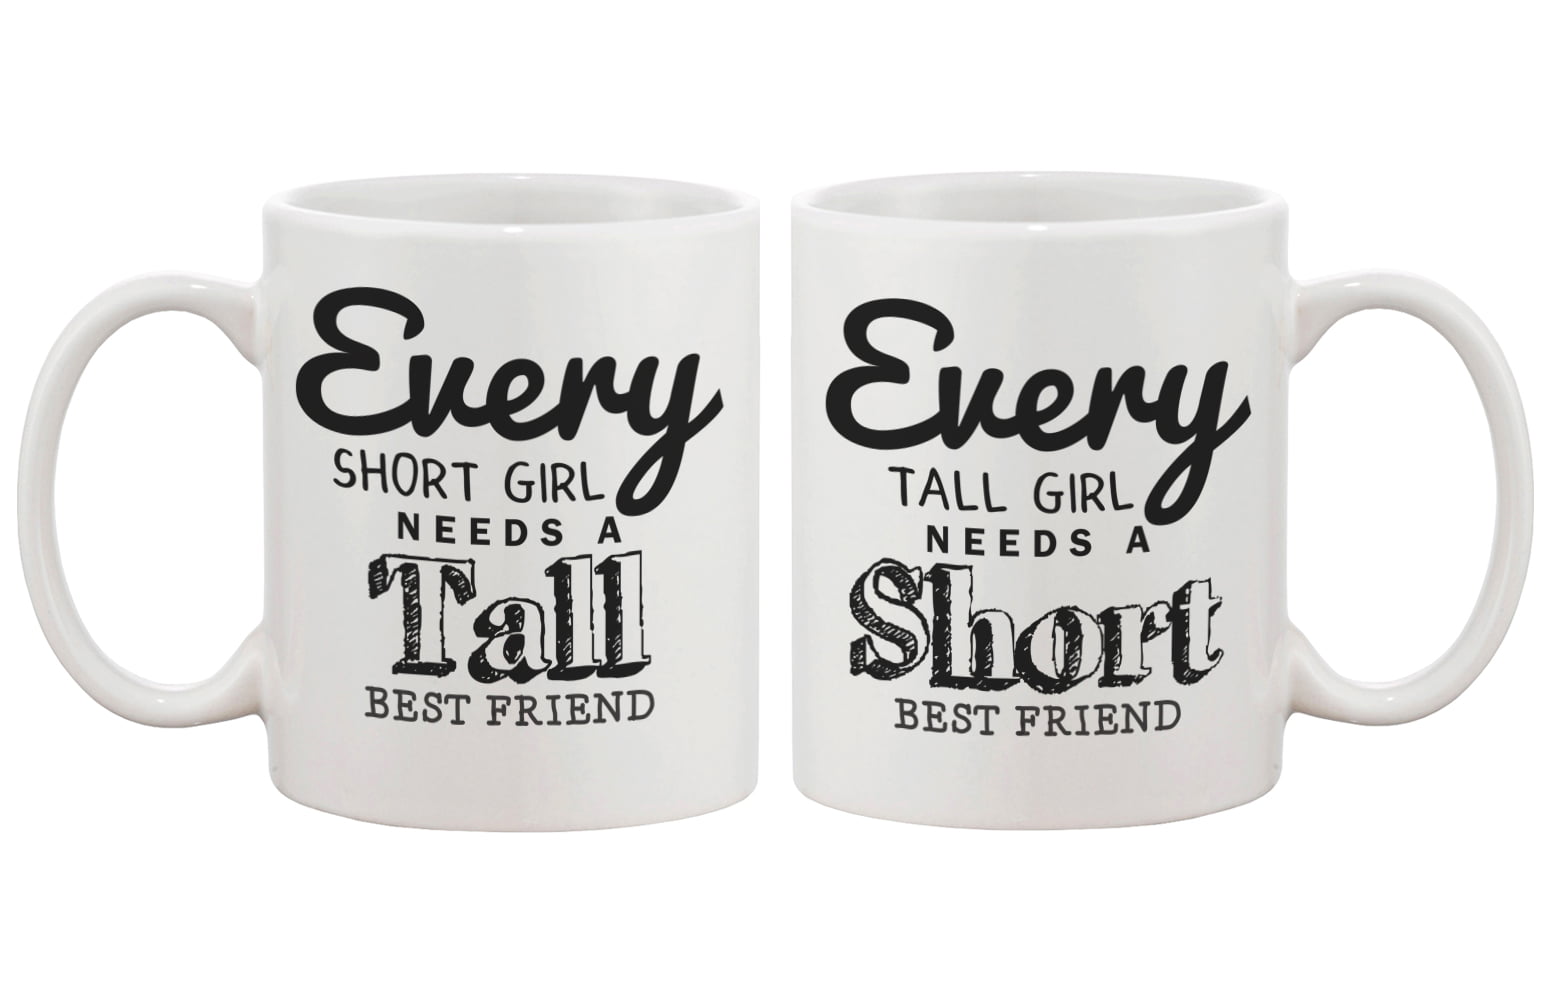 cute coffee mugs for best friends 